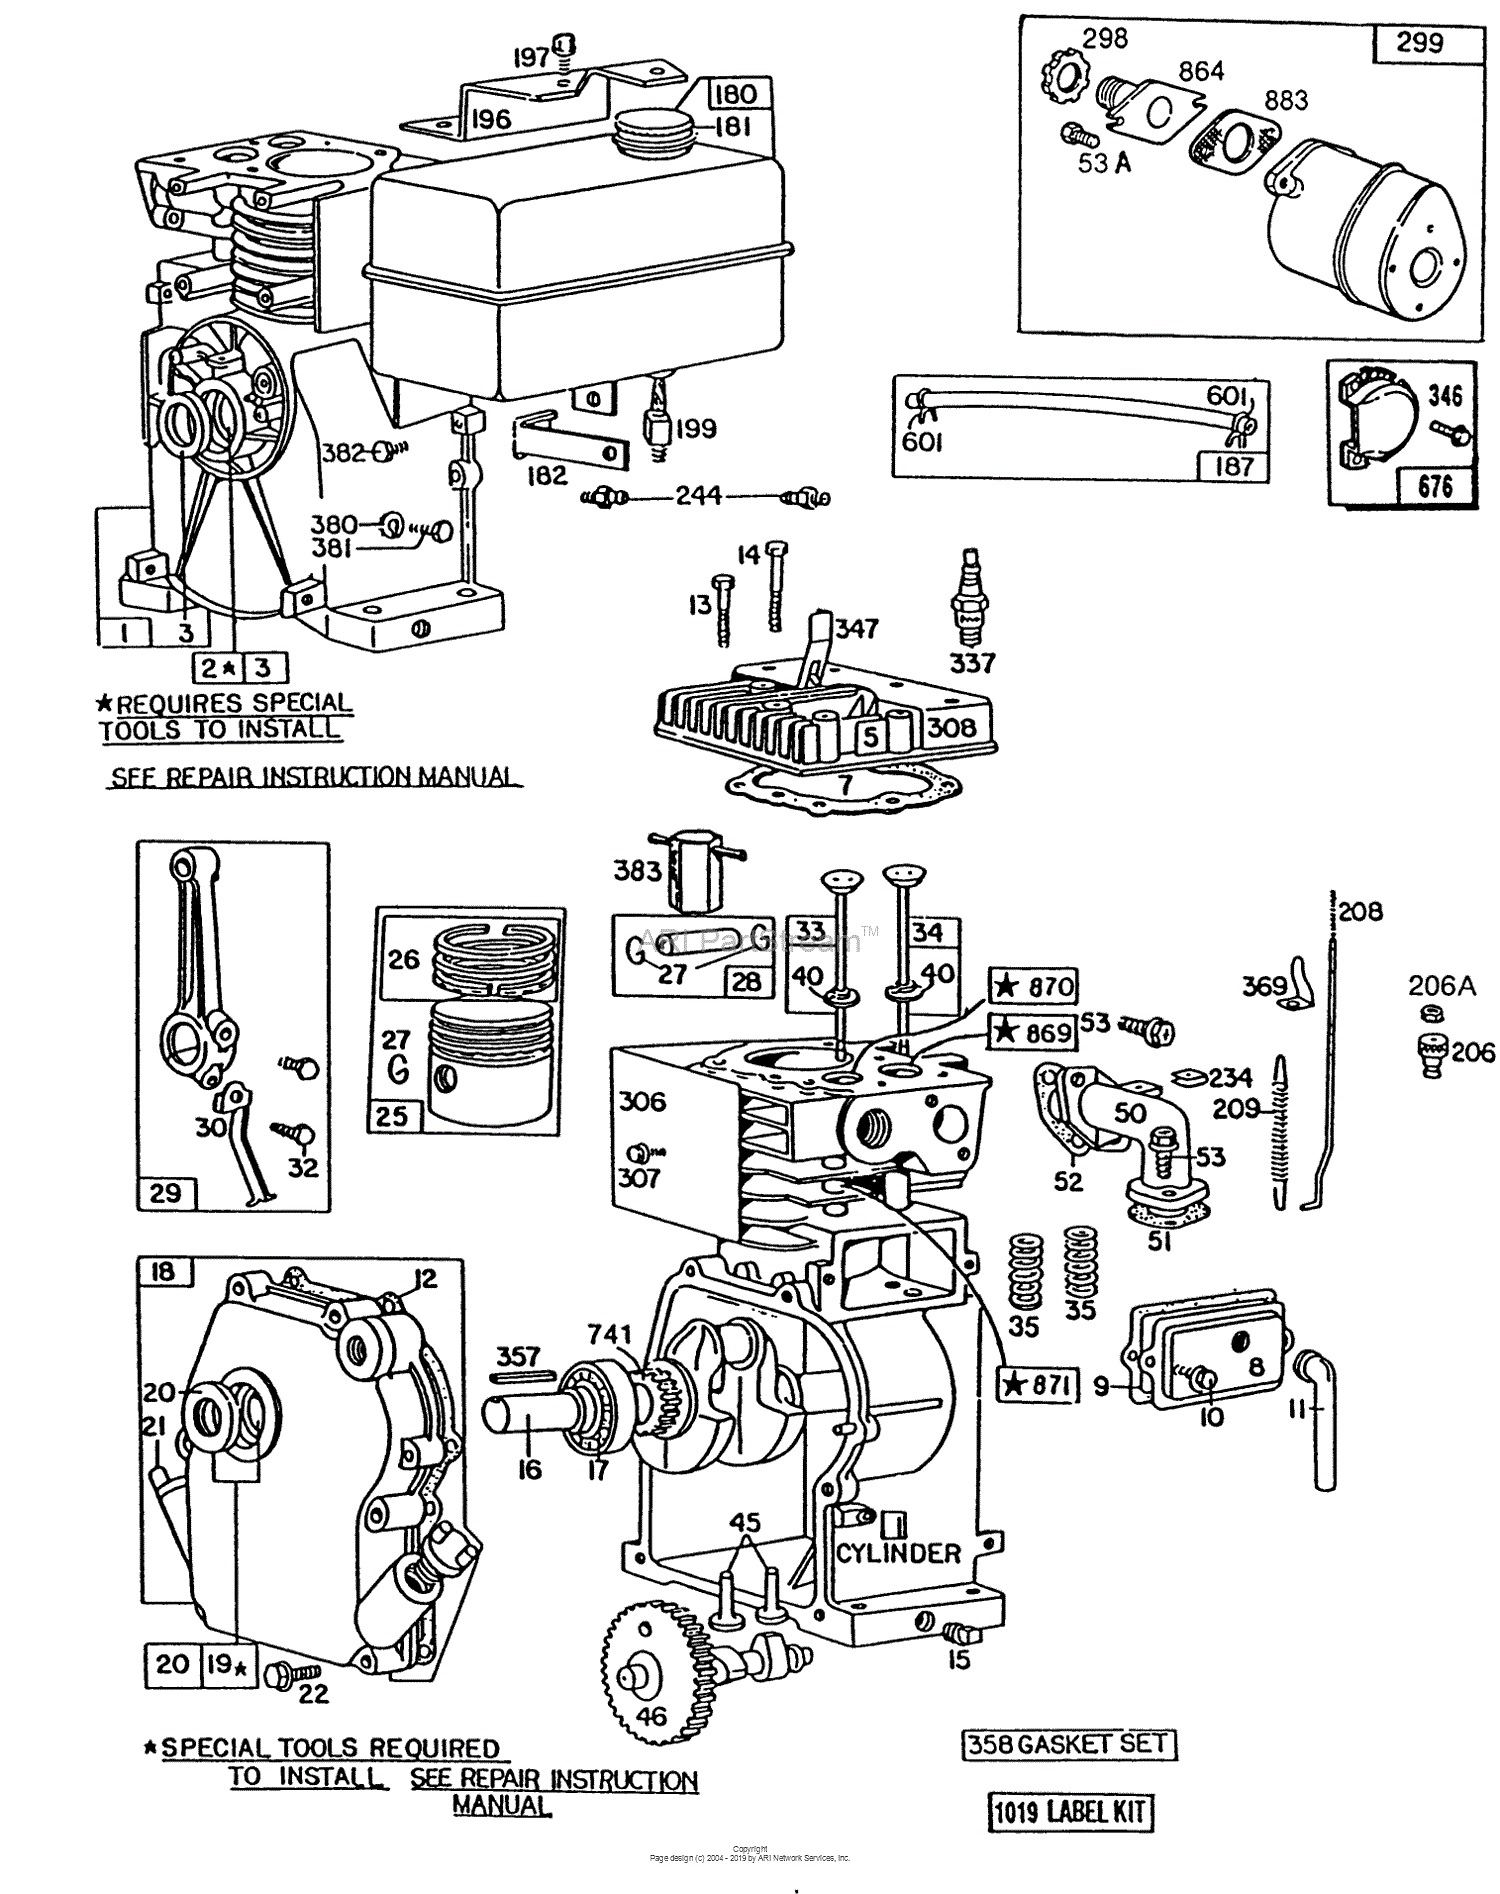 Briggs And Stratton 17.5 Hp Engine Parts Diagram 1